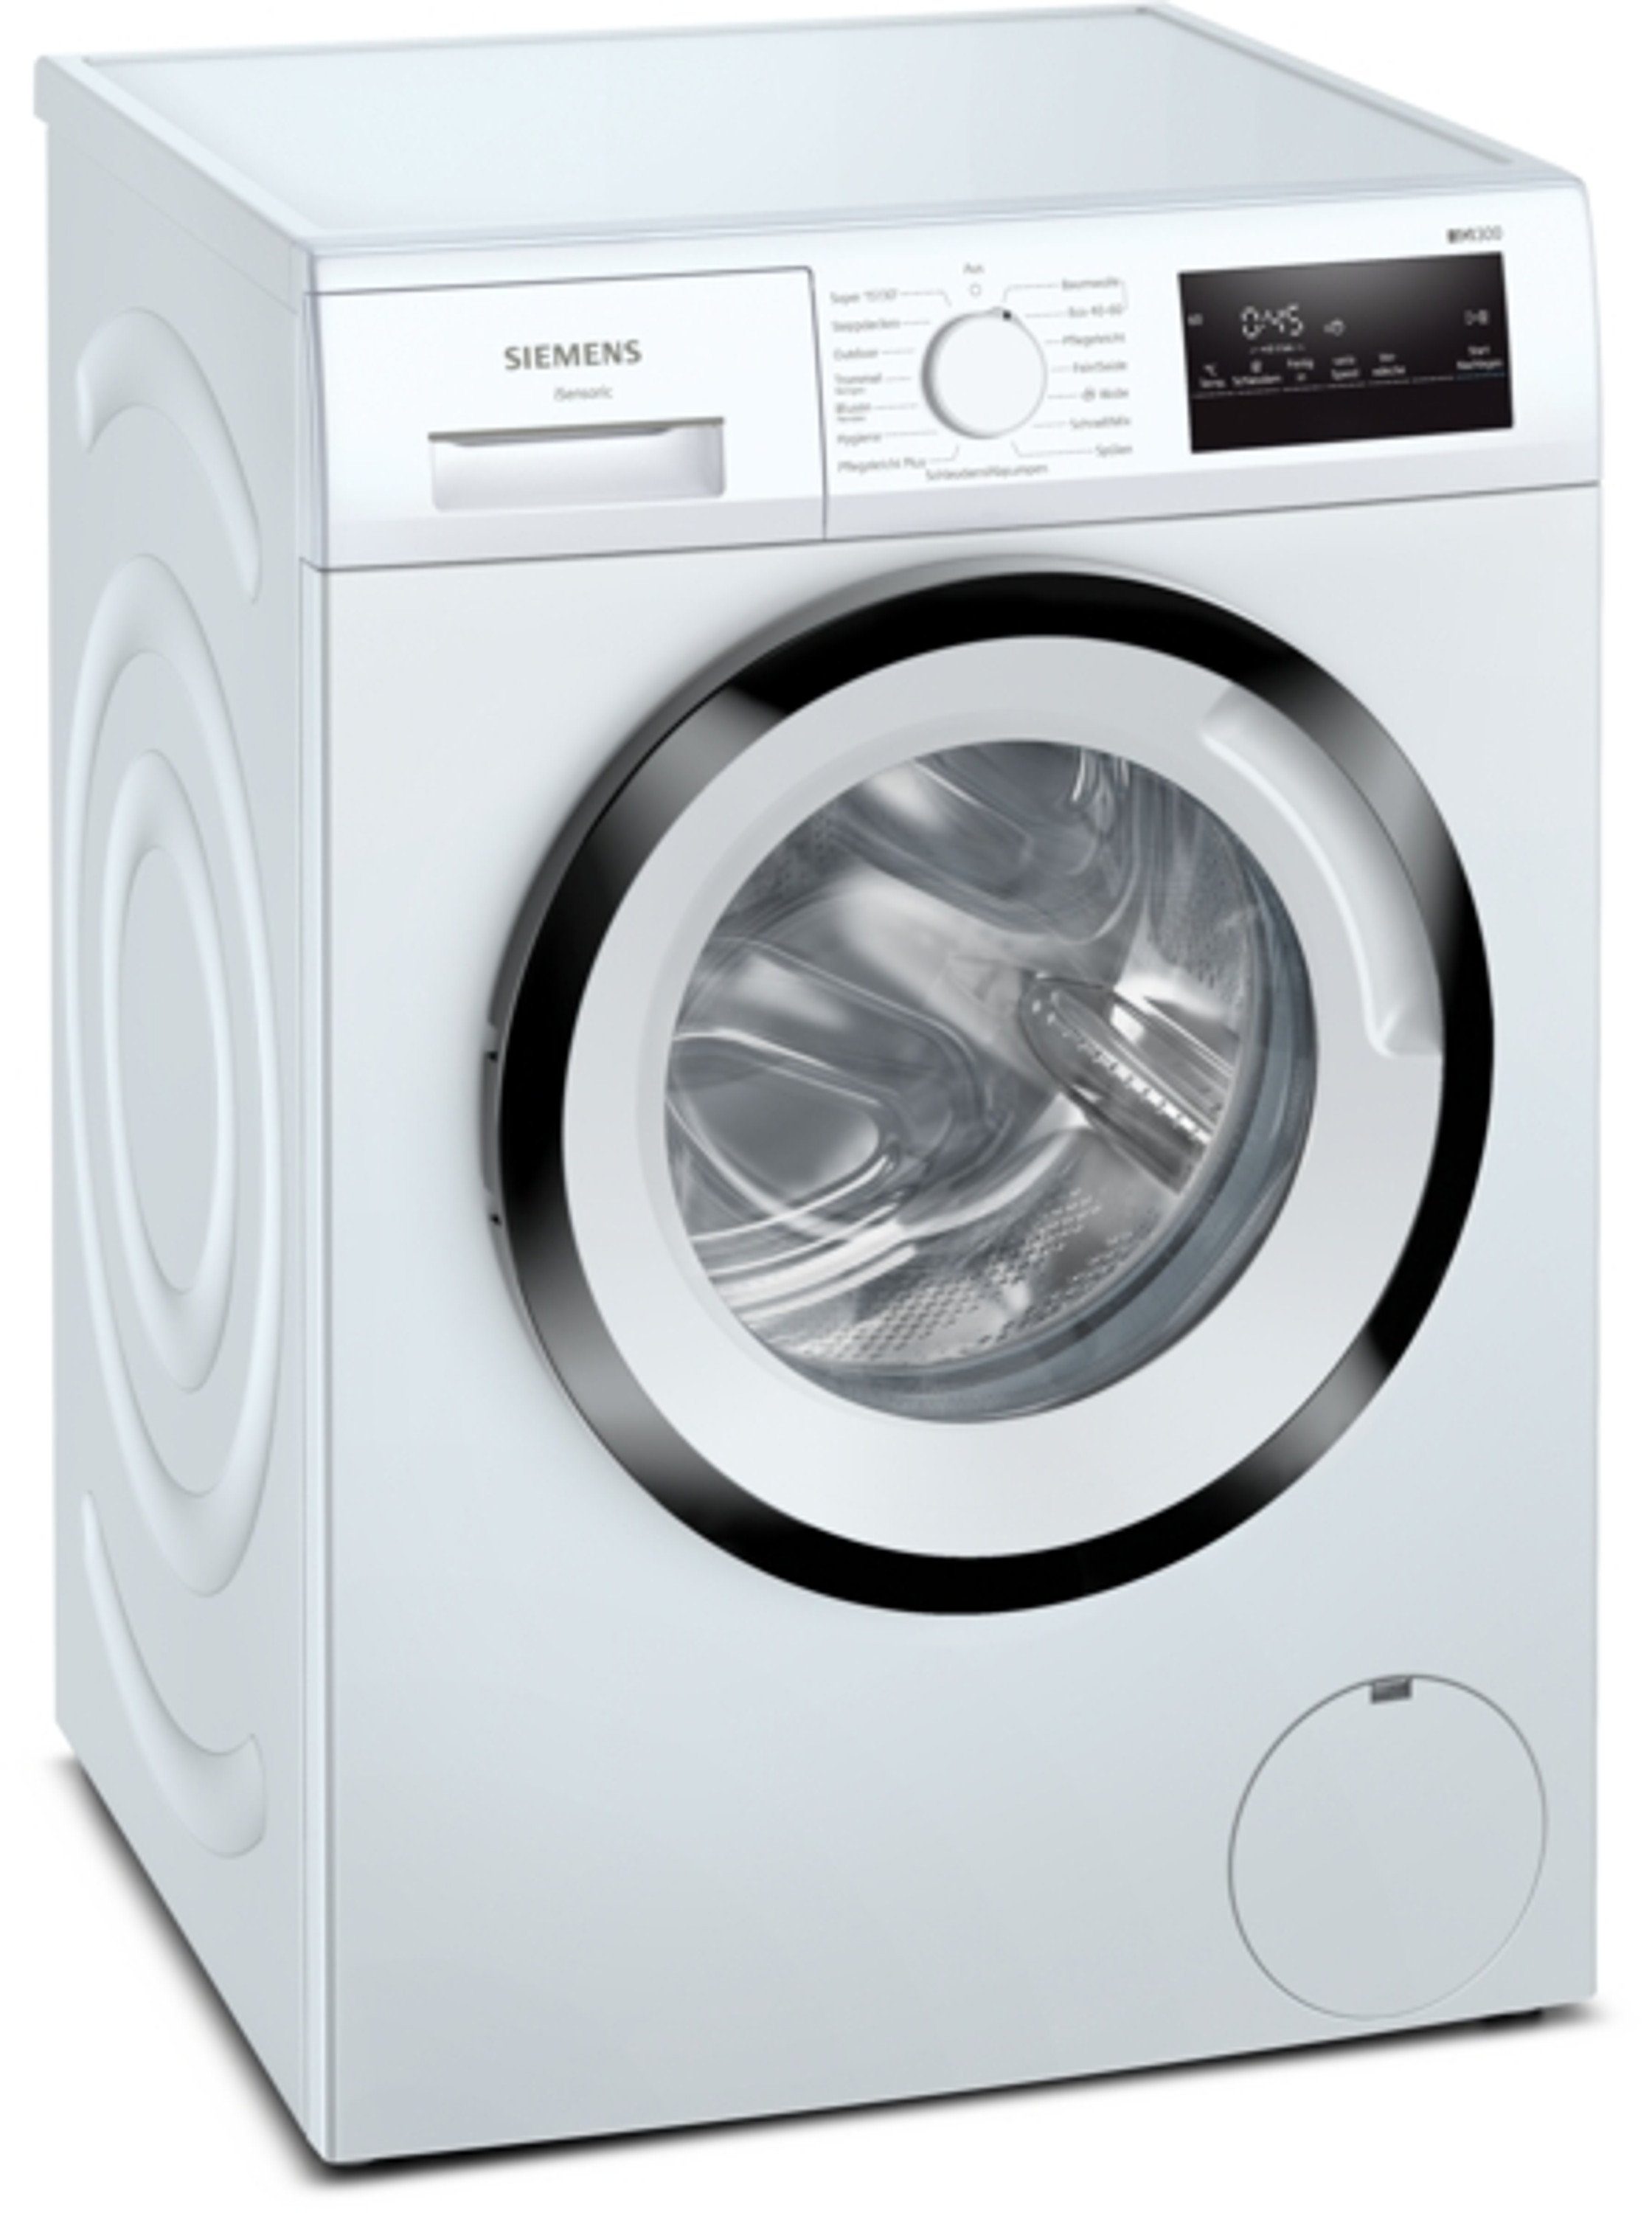 SIEMENS Waschmaschine WM14N129, 8 kg, 1400 U/min, speedPack L, LED-Display,  simpleTouch, Outdoor-Programm, iQdrive